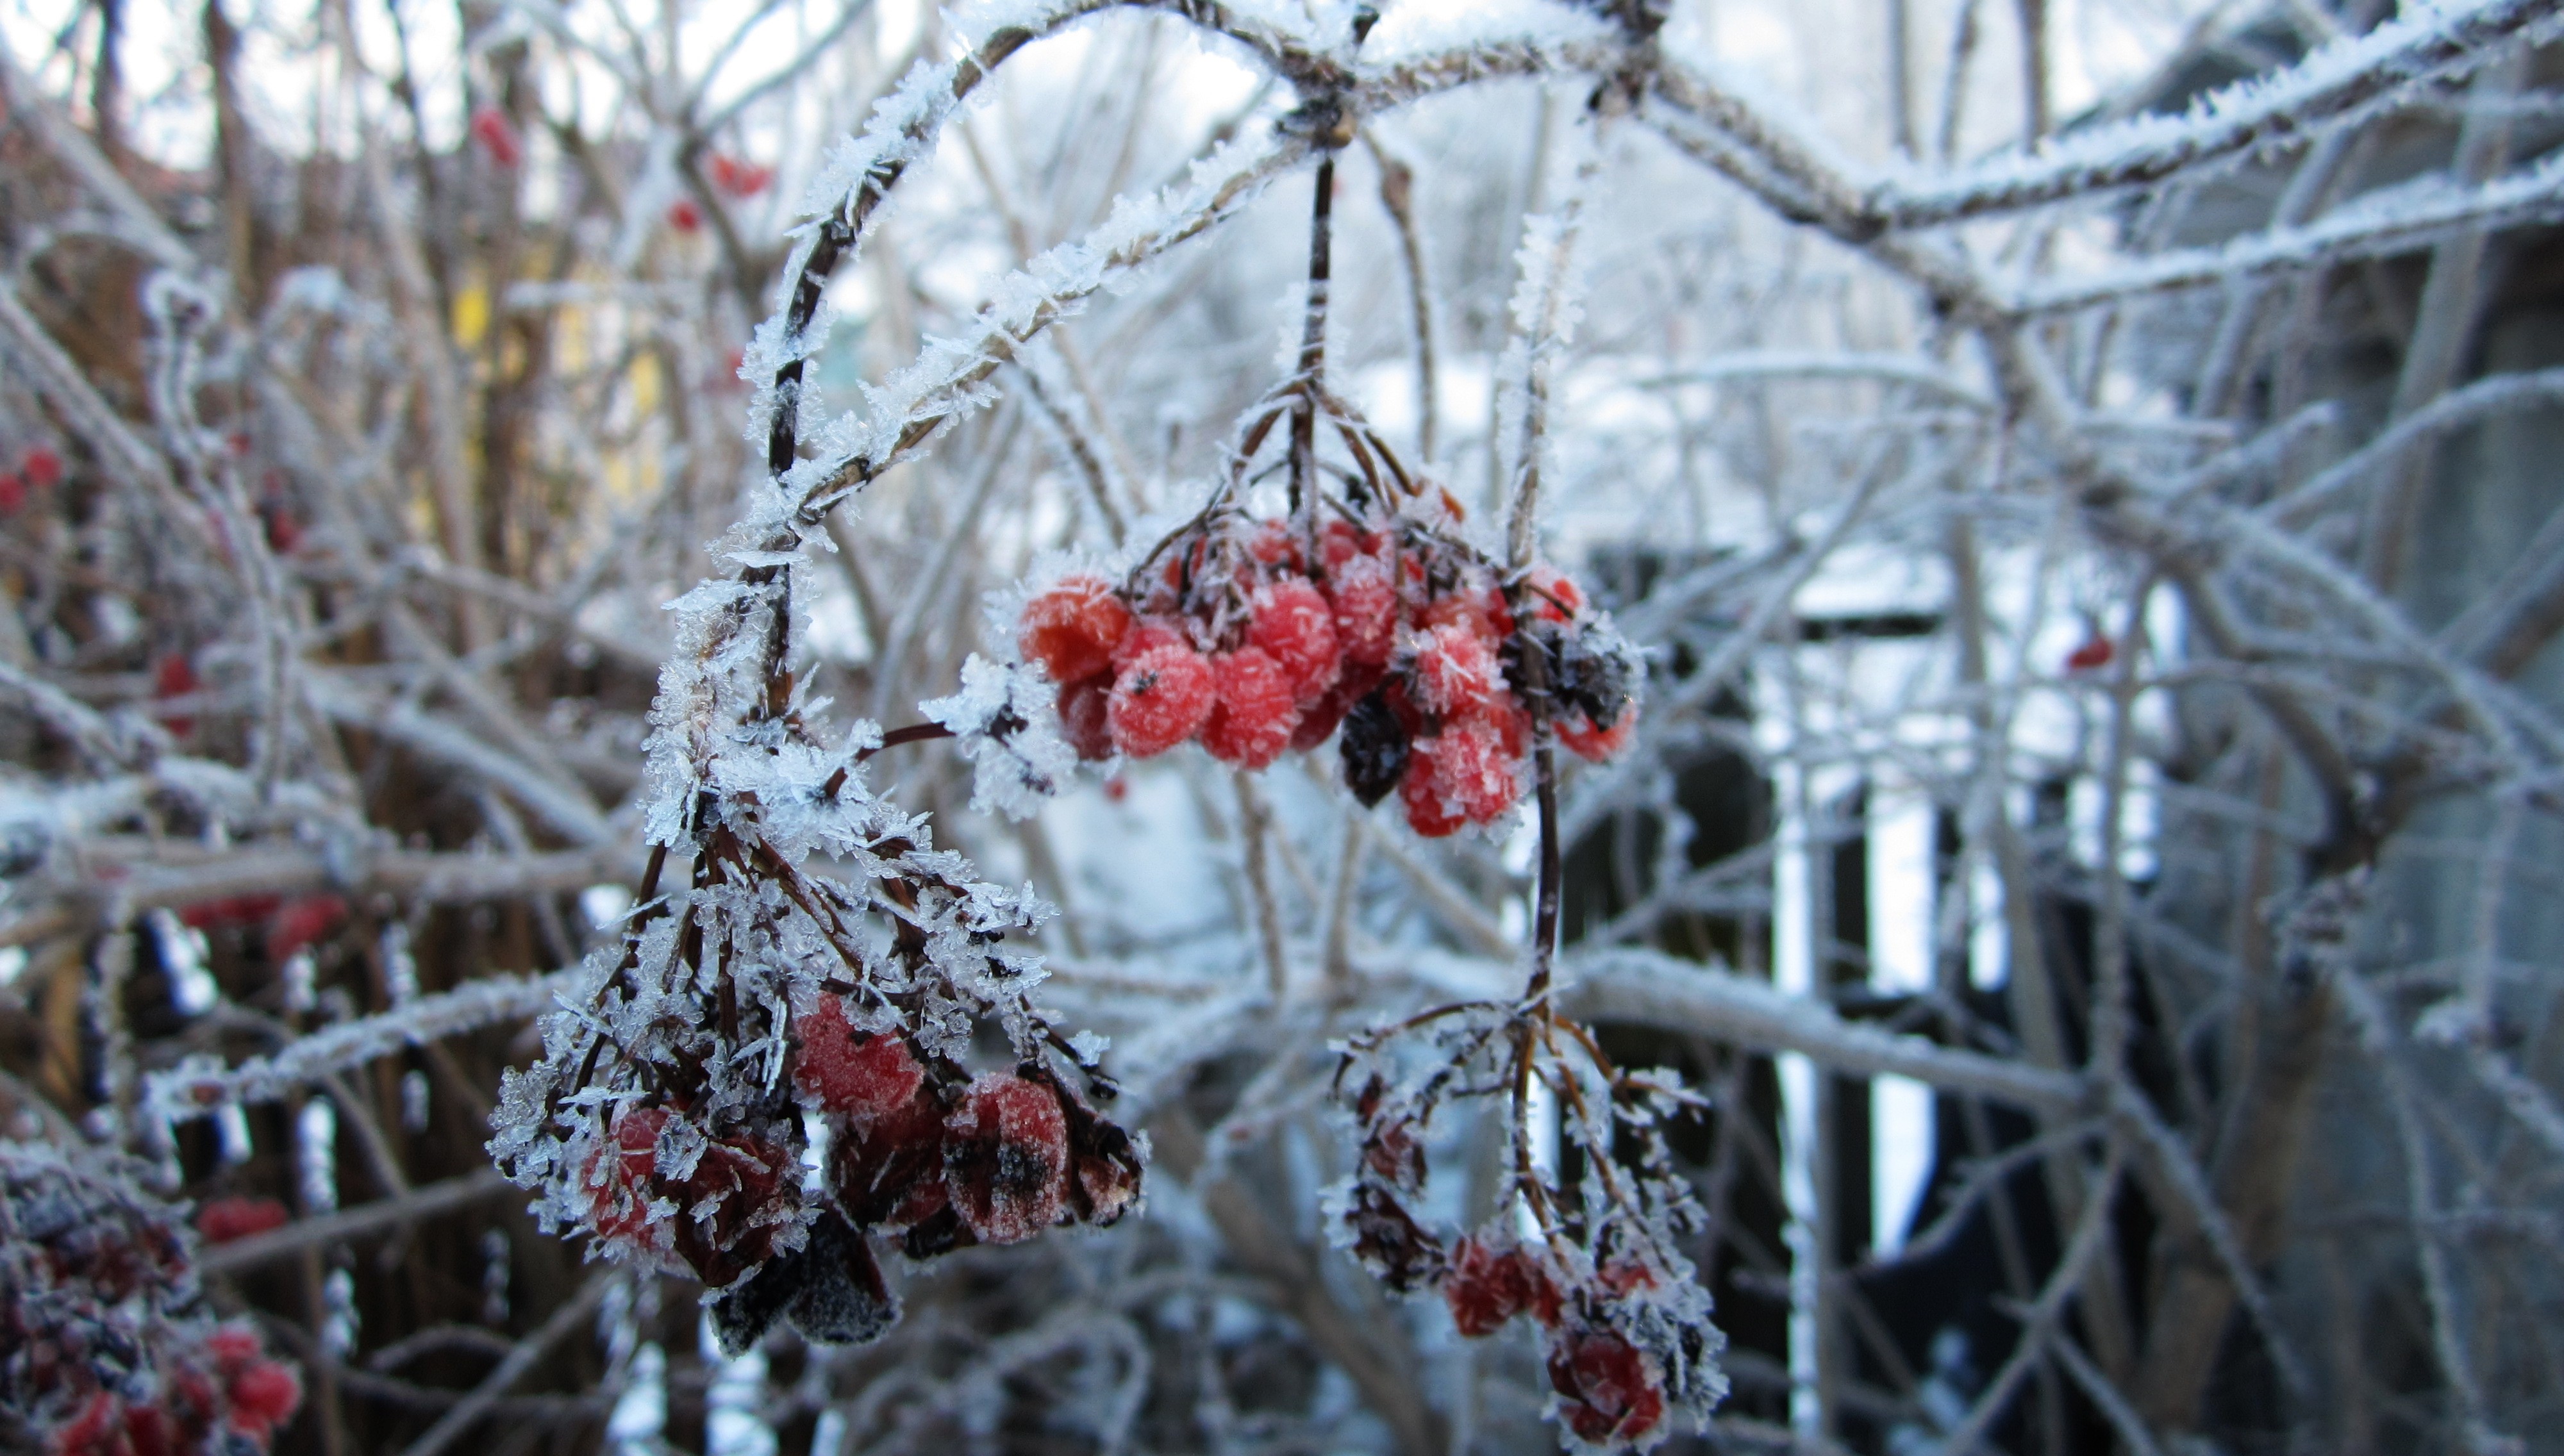 General 4000x2272 Russia winter snow rowan rowanberry snowflakes closeup macro ice plants